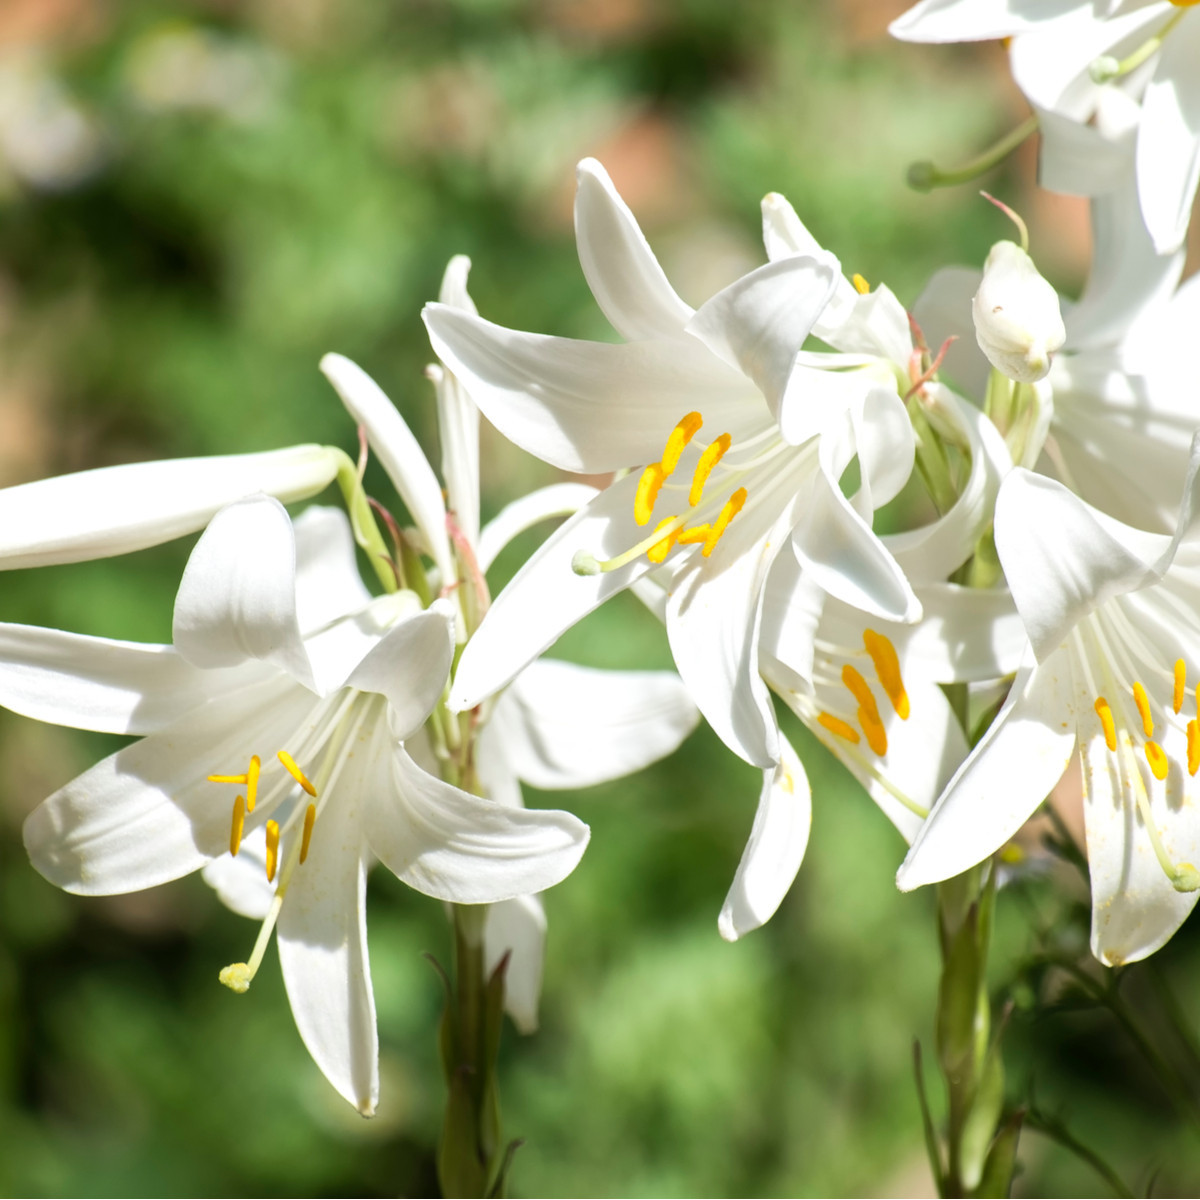 Lilie bělostná - Lilium candidum - cibule lilie - 1 ks